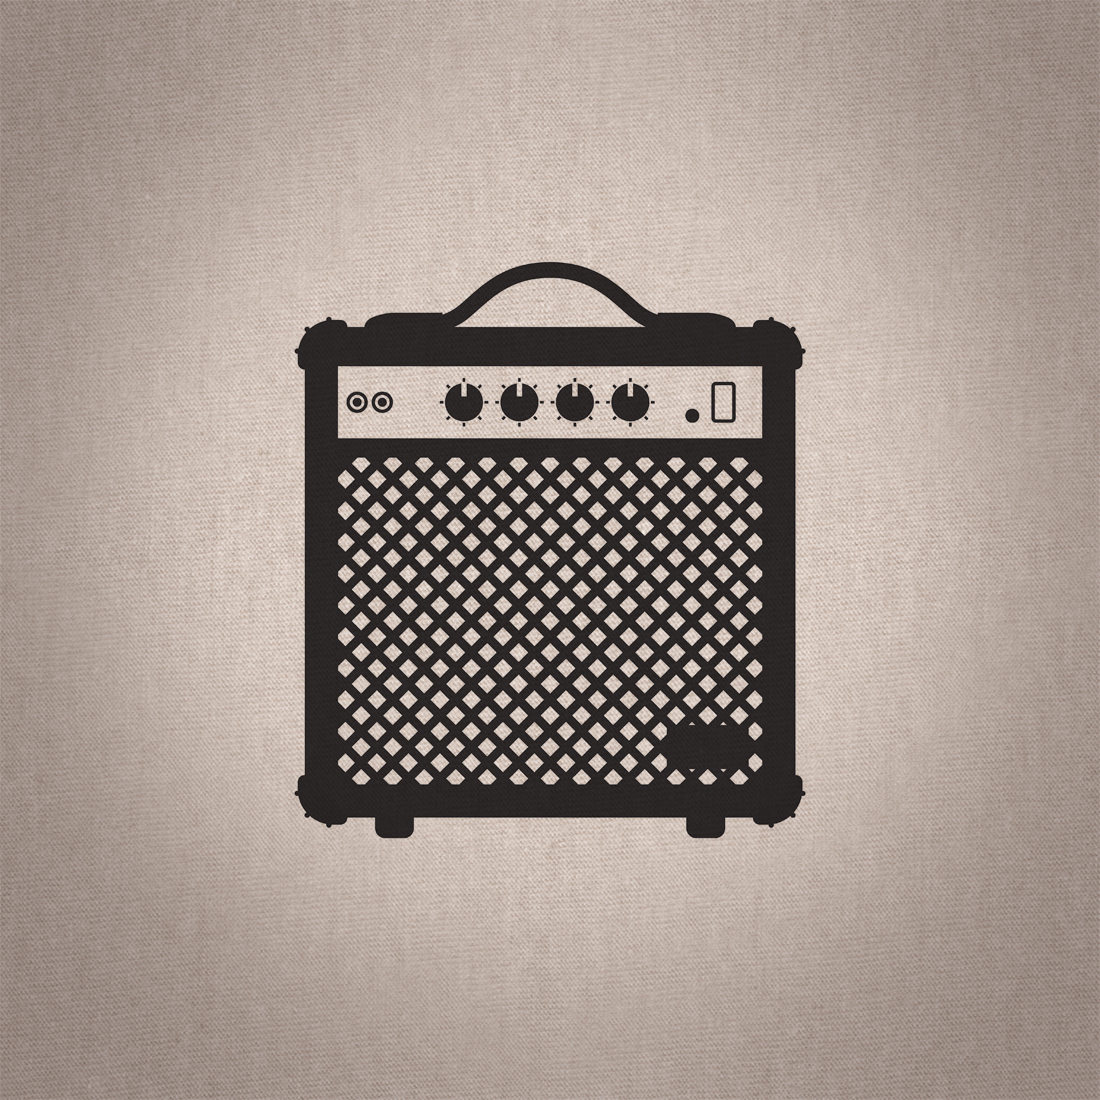 logo noun Musical Musique instrument son noise accordion